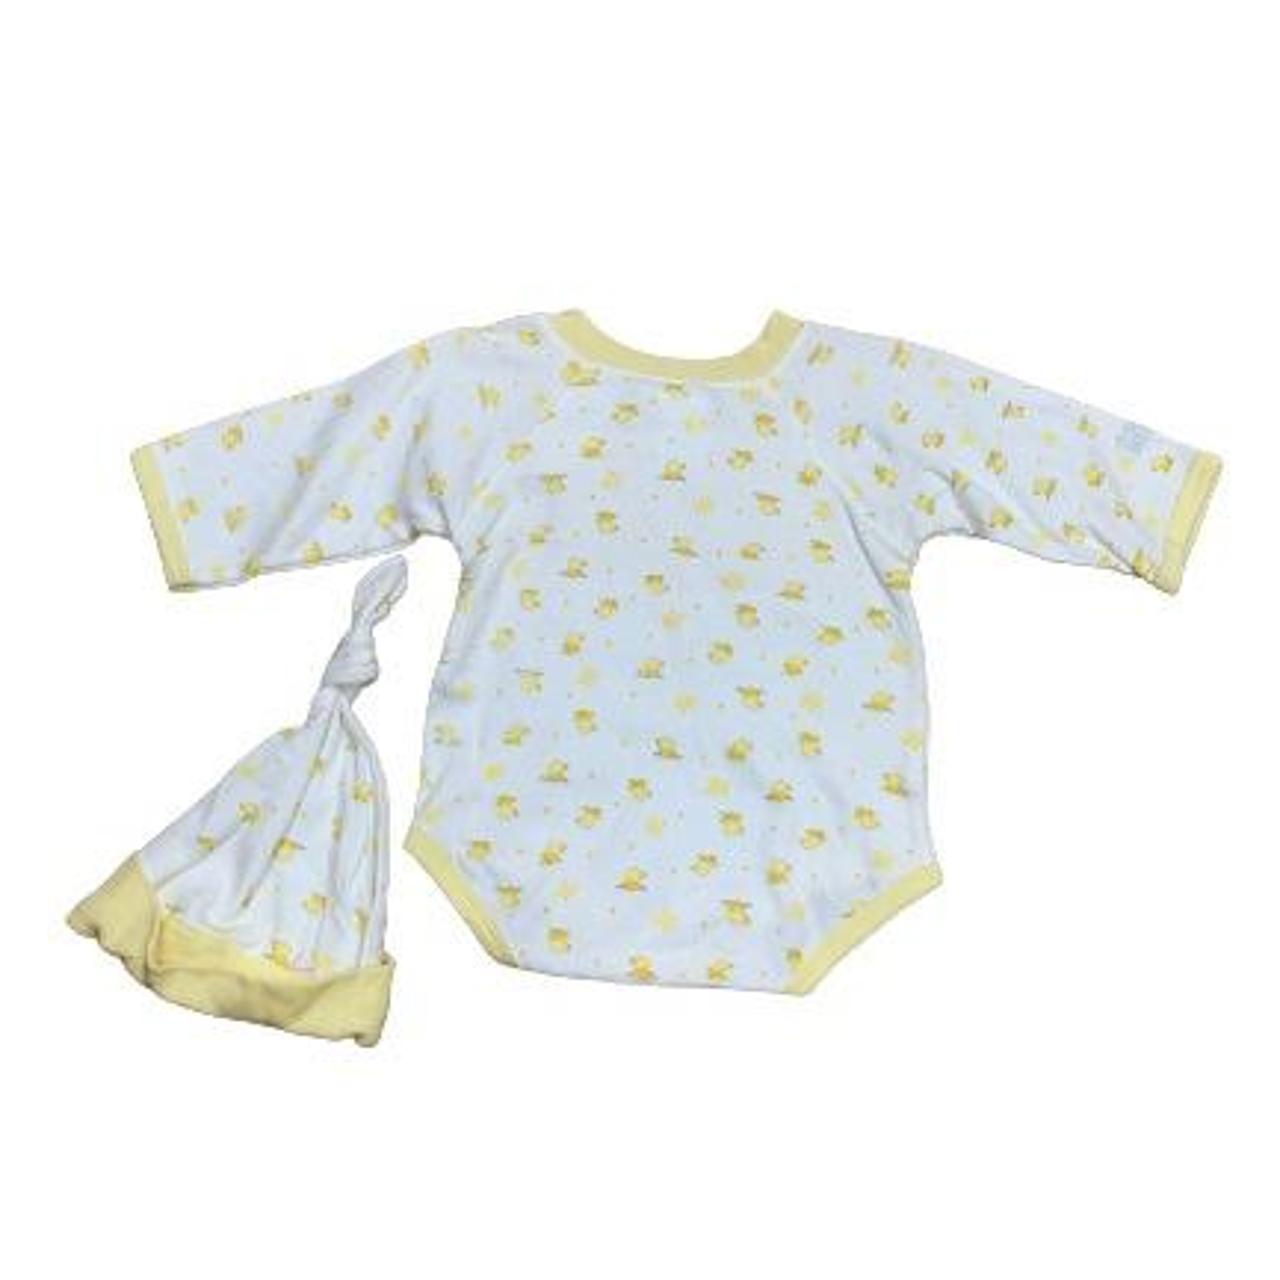 bon bebe Yellow and White Pajamas (3)